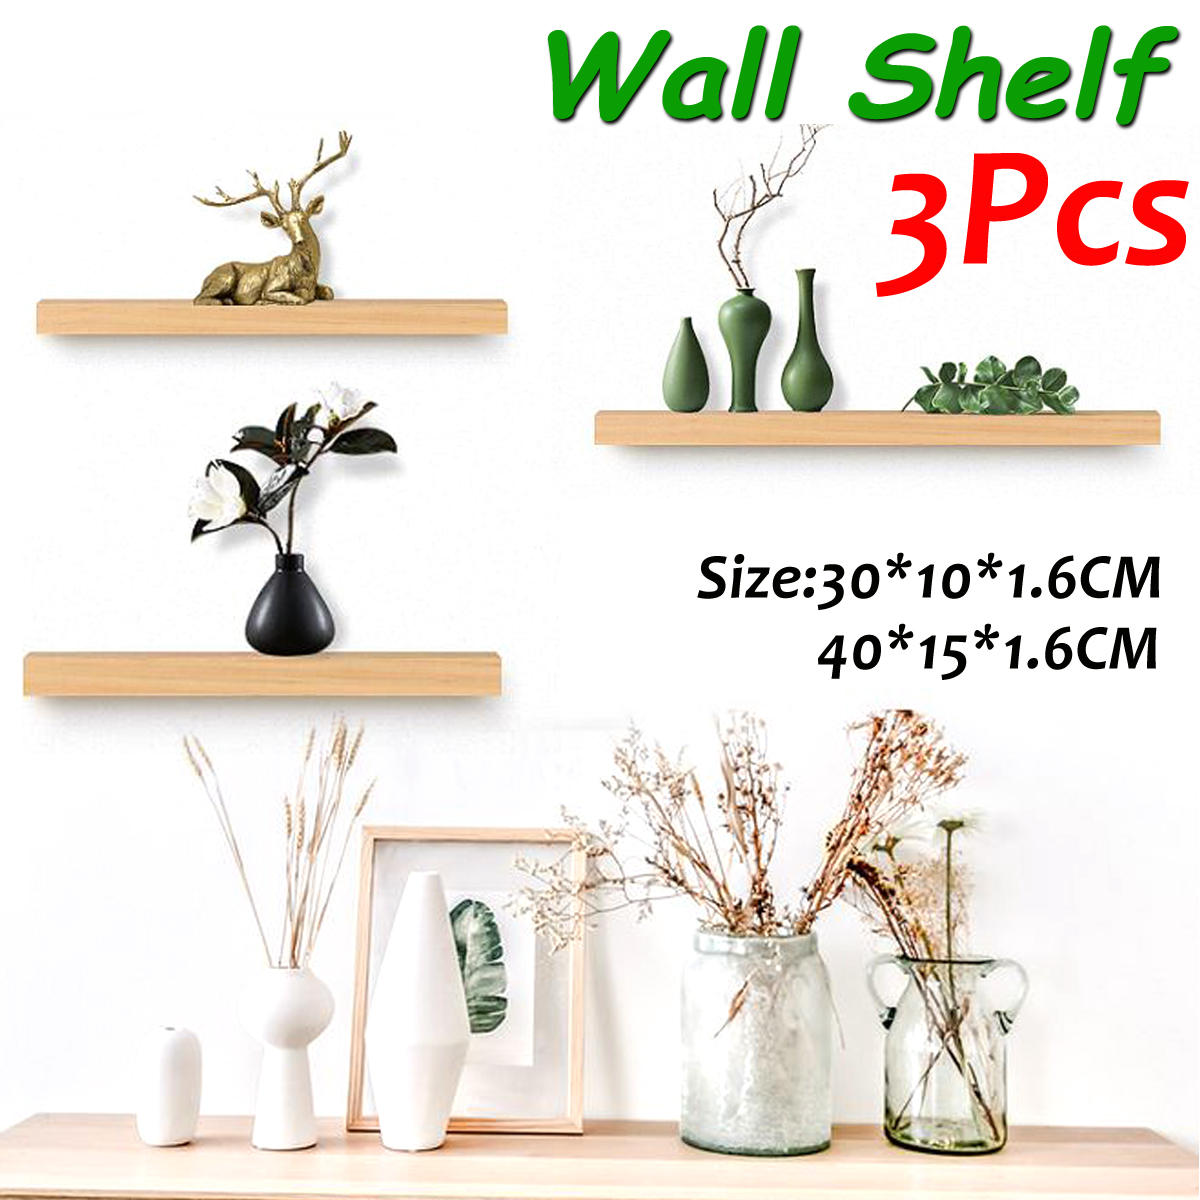 Image of 3 PCS Wall Shelf Wooden Rack Plant Show Platform for living Room